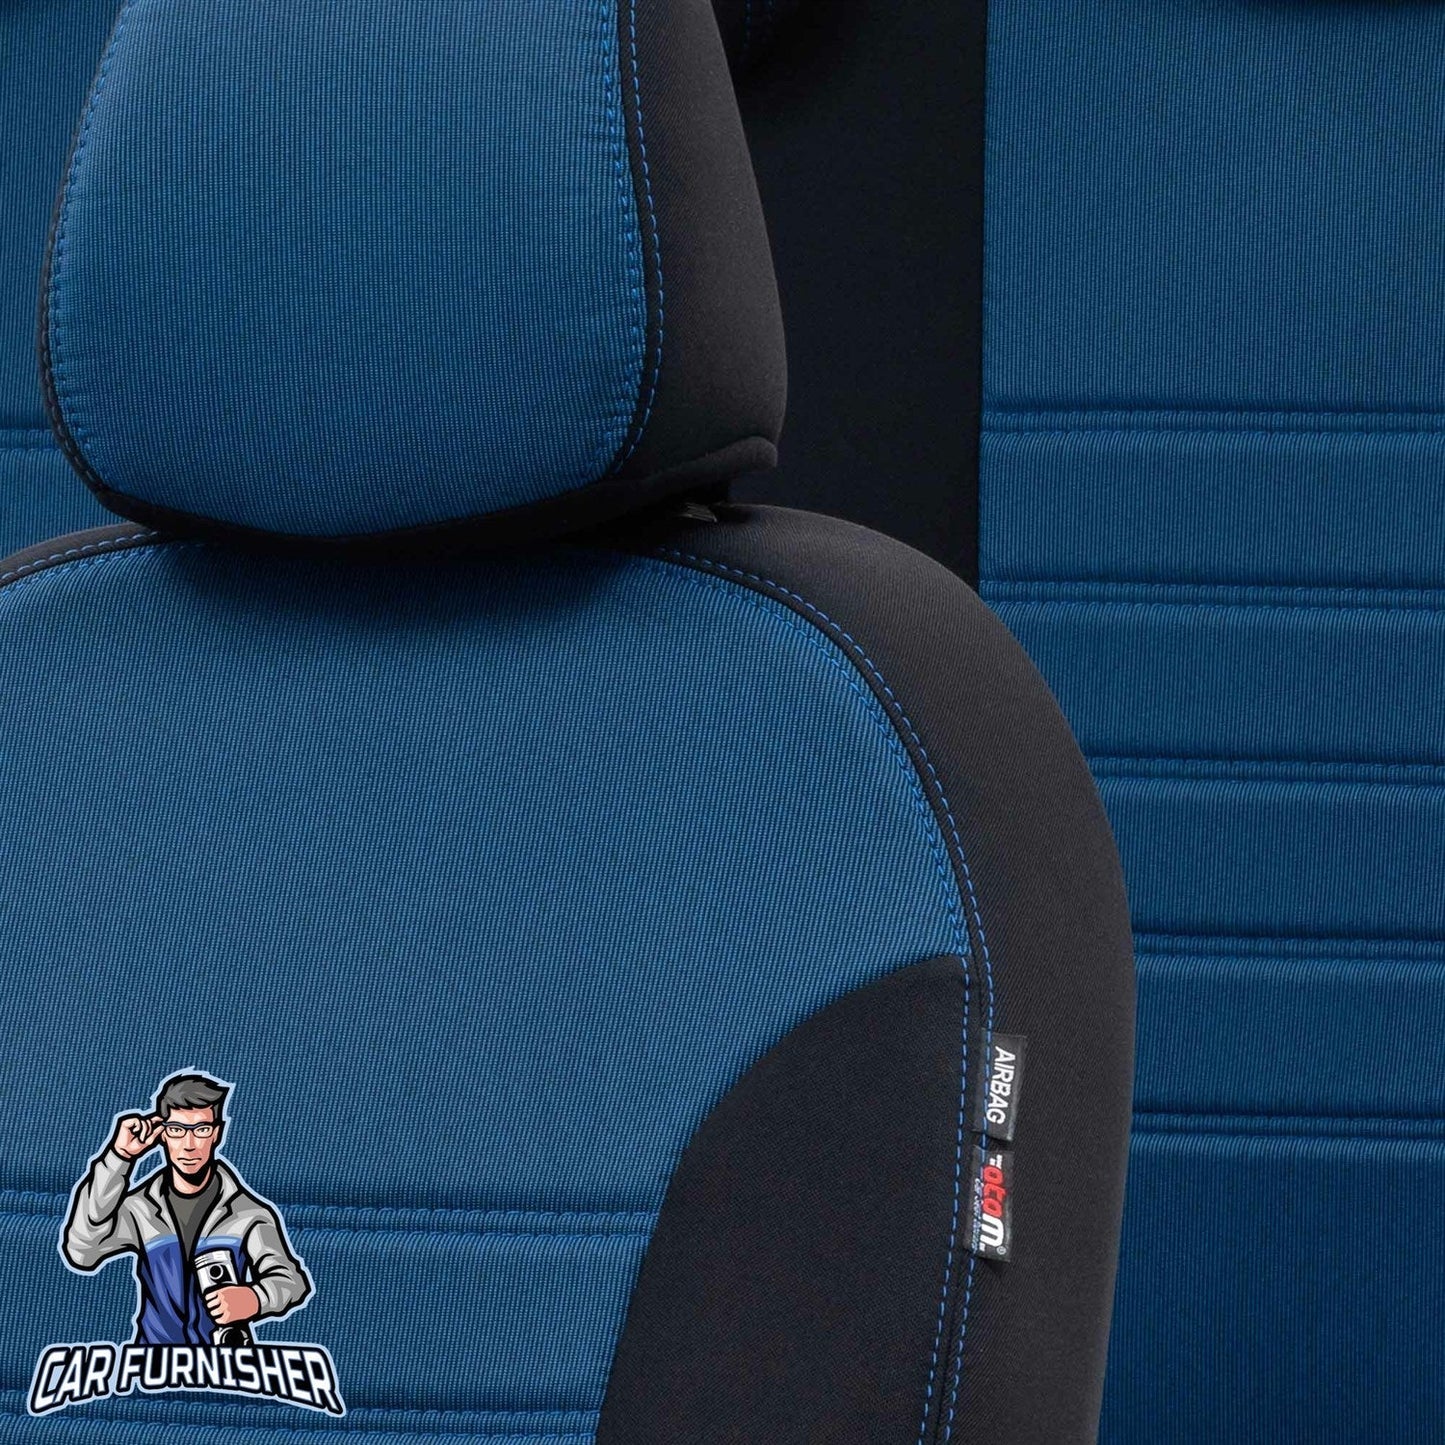 Ford B-Max Seat Covers Original Jacquard Design Blue Jacquard Fabric